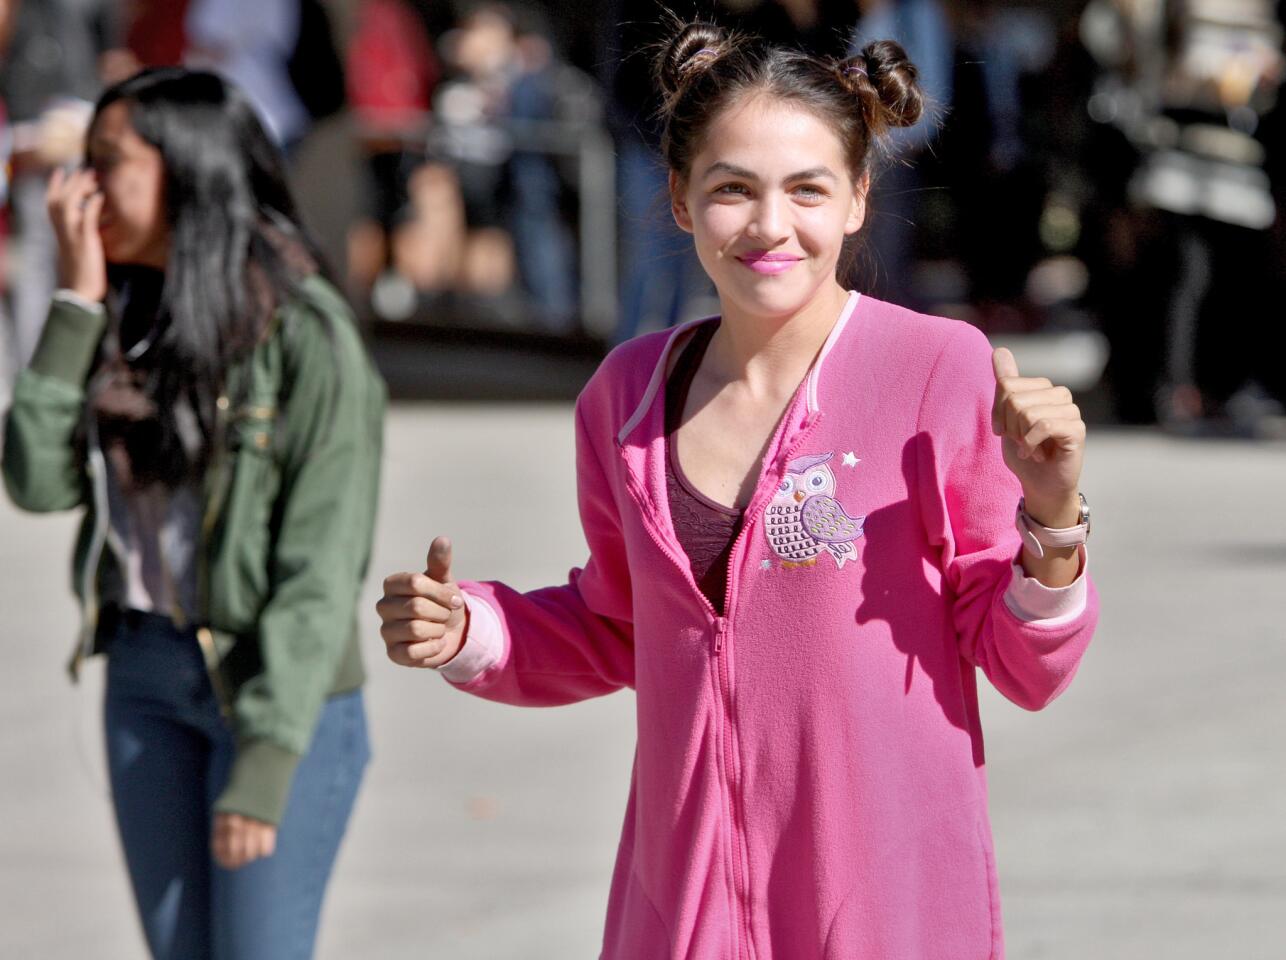 As part of Spirit Week, junior Valeria Hidalgo dances while wearing her pink pajamas during Pajama Day at Glendale High School in Glendale on Thursday, November 5, 2015.